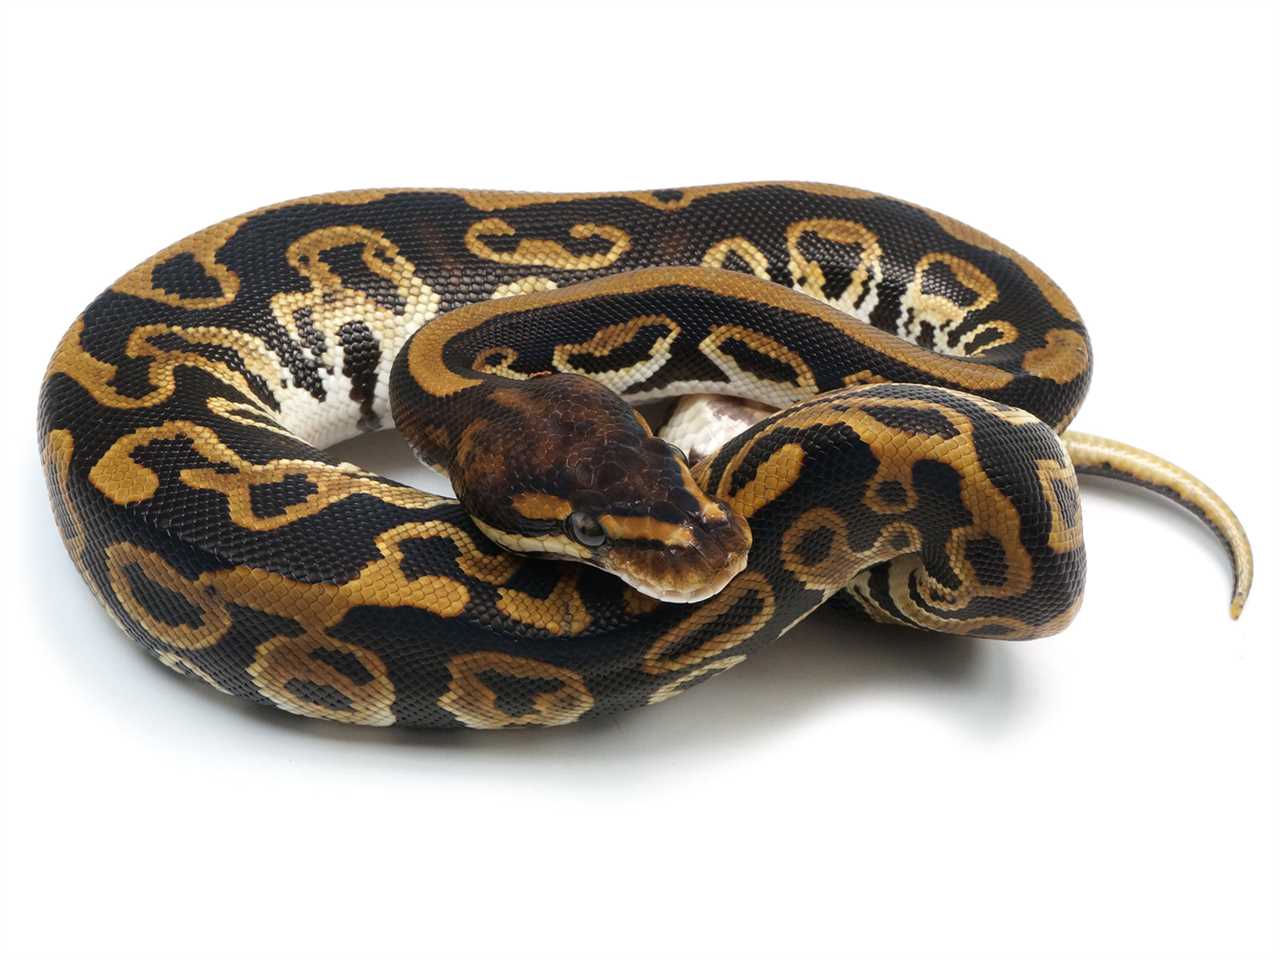 Cypress Ball Python Breeding